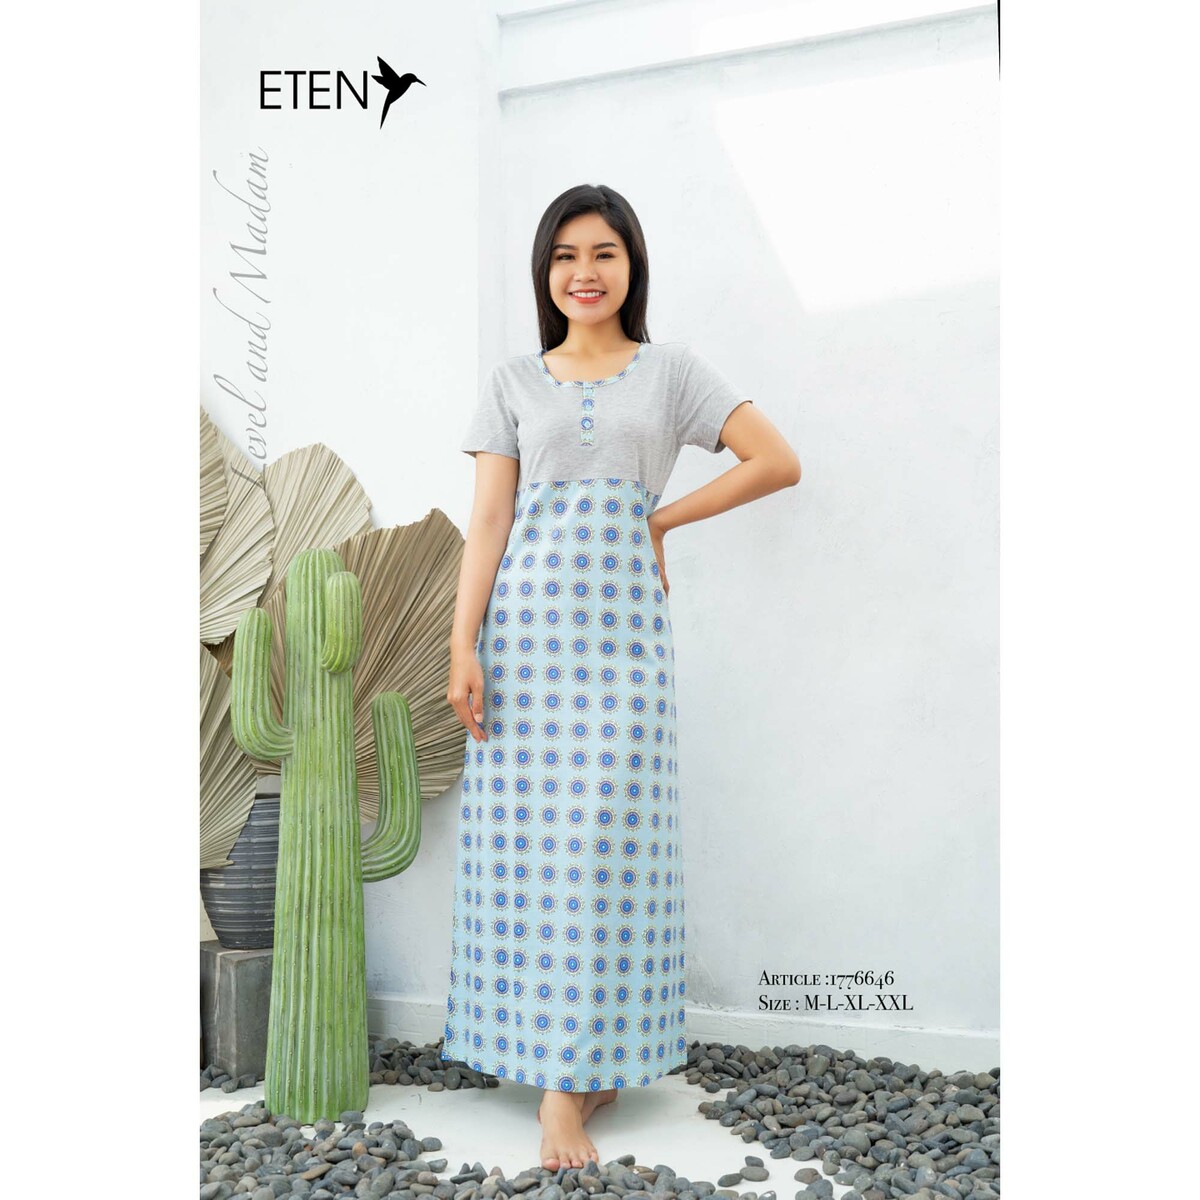 Eten Womens Night Gown Short Sleeve LM12, M